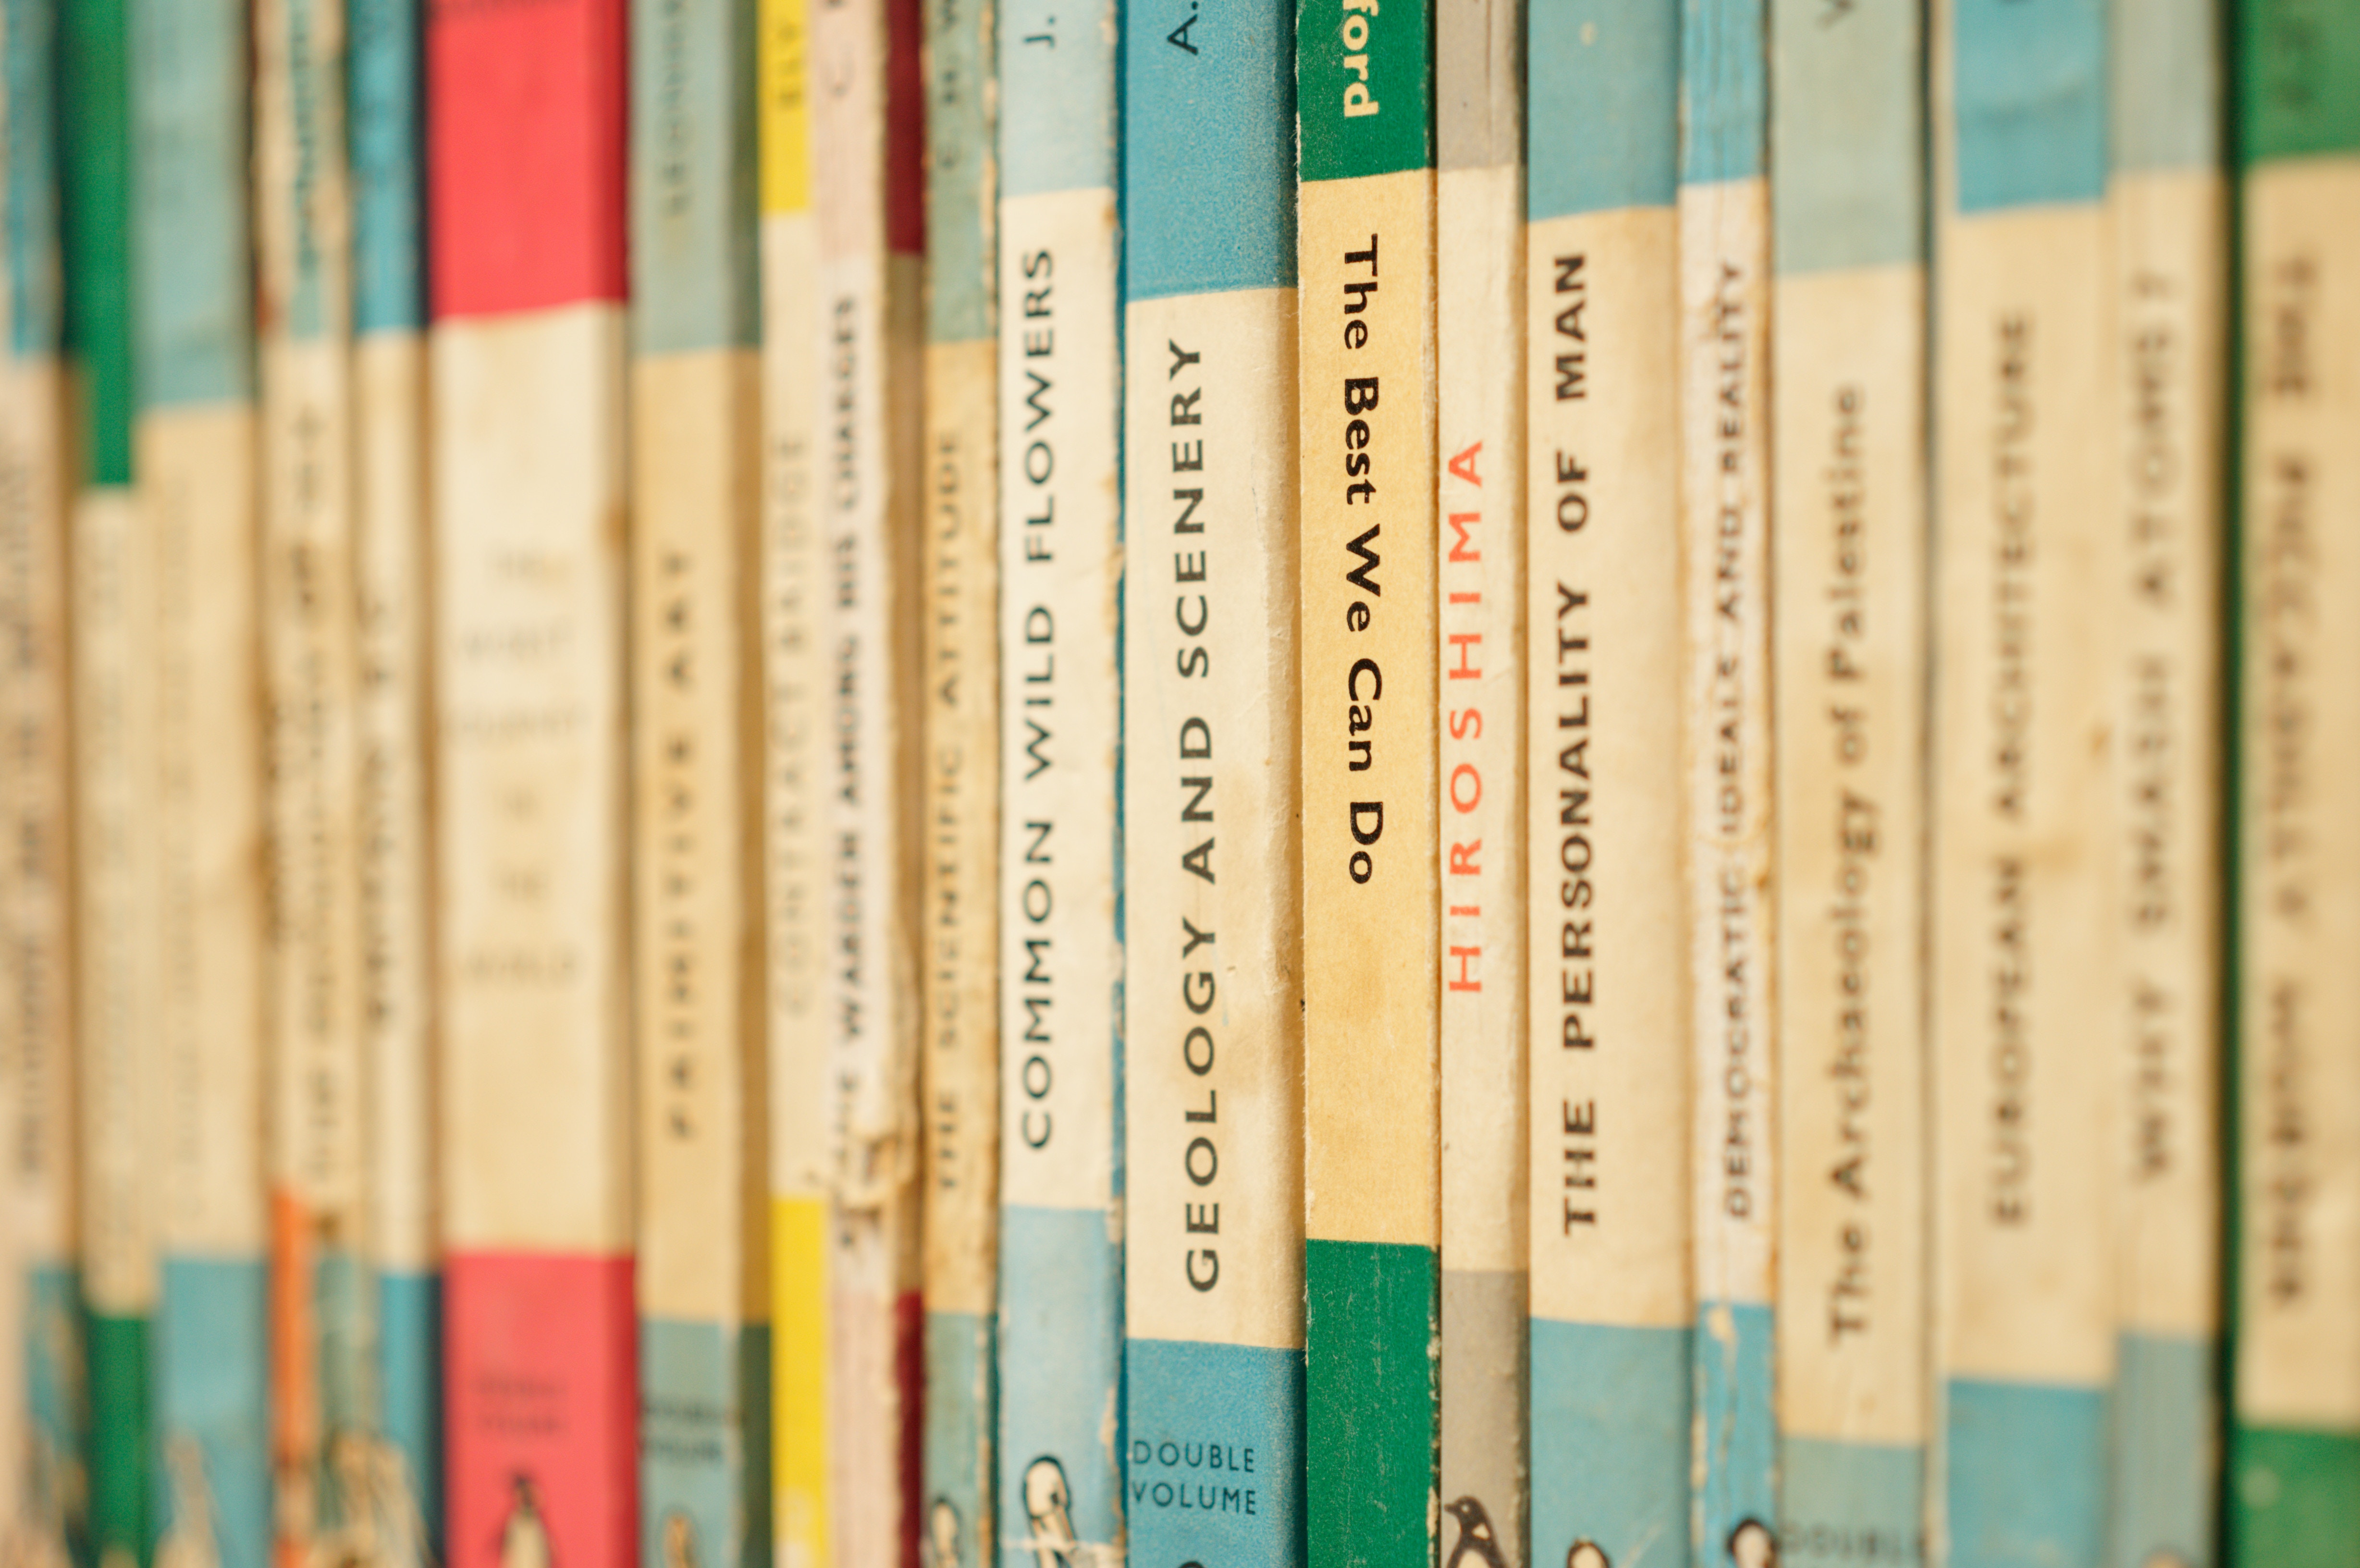 Photo of several vintage Penguin books by Karim Ghantous on Unsplash